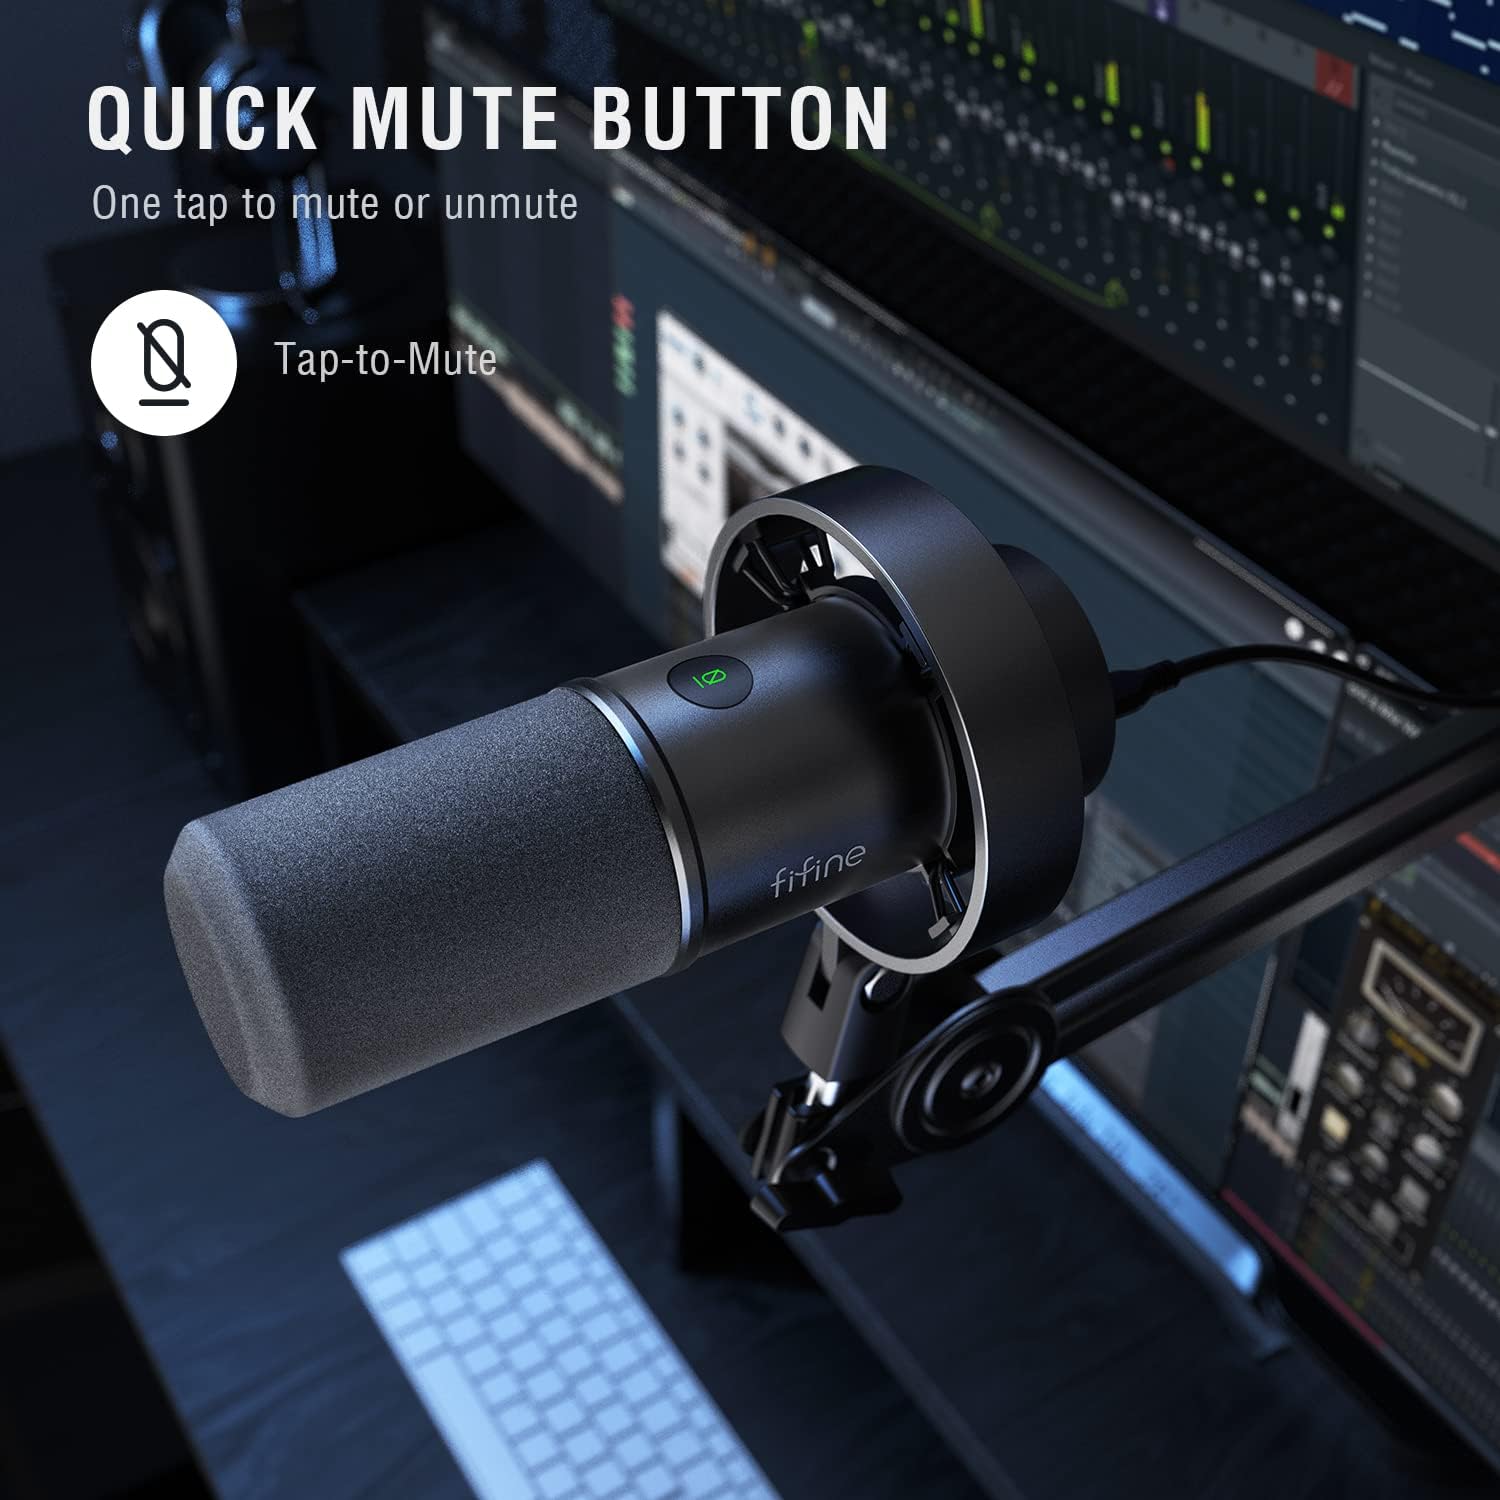 Micrófono dinámico, micrófono de PC de grabación de podcasts XLRUSB para